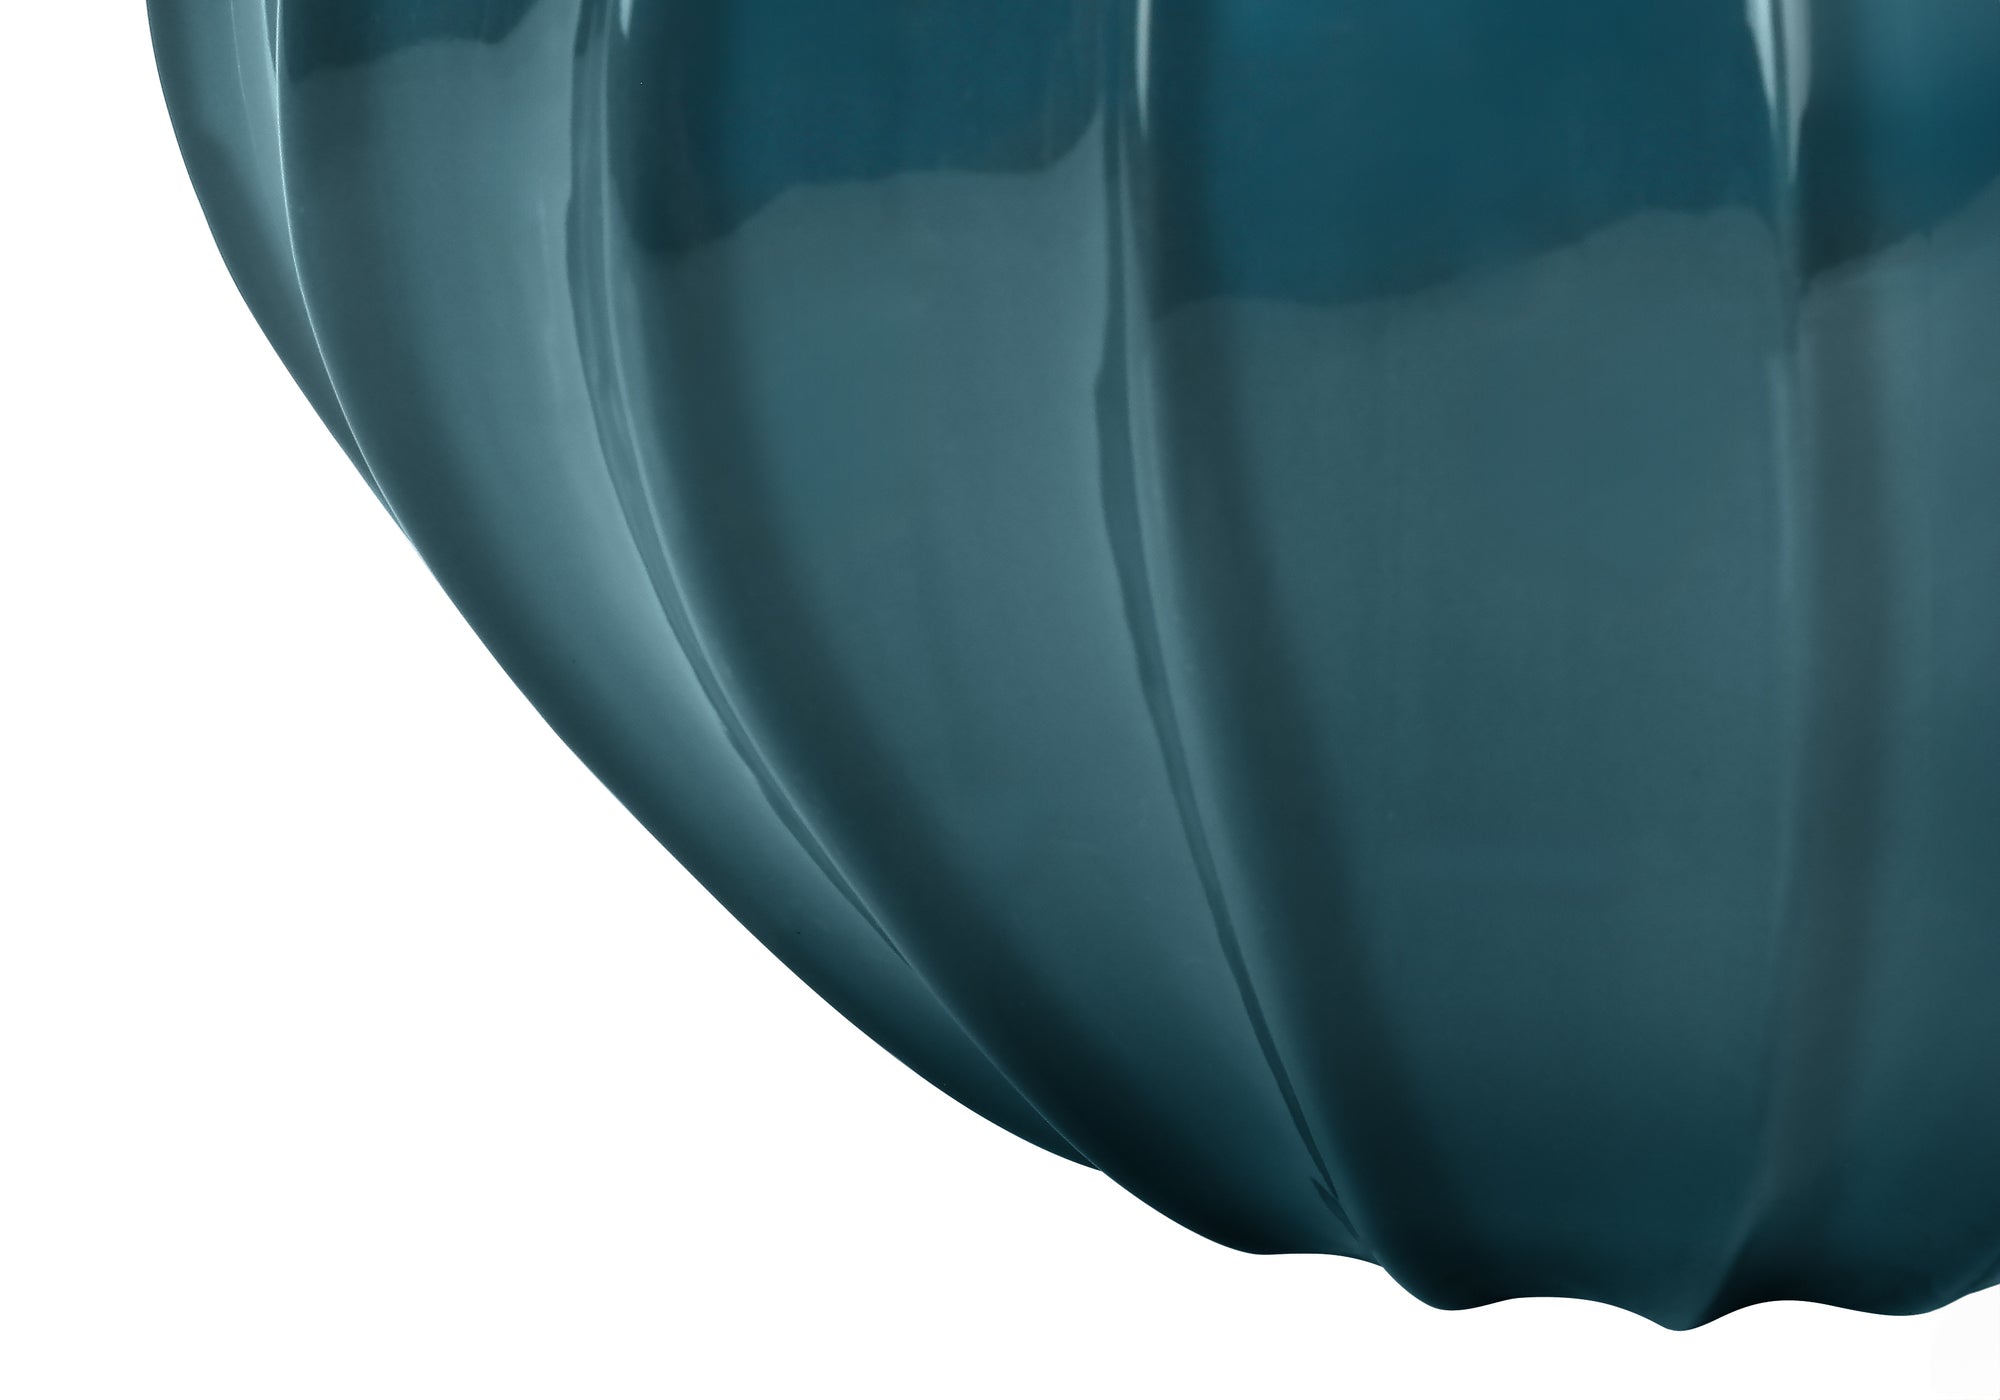 MN-869612    Lighting, 24"H, Table Lamp, Blue Ceramic, Ivory / Cream Shade, Transitional